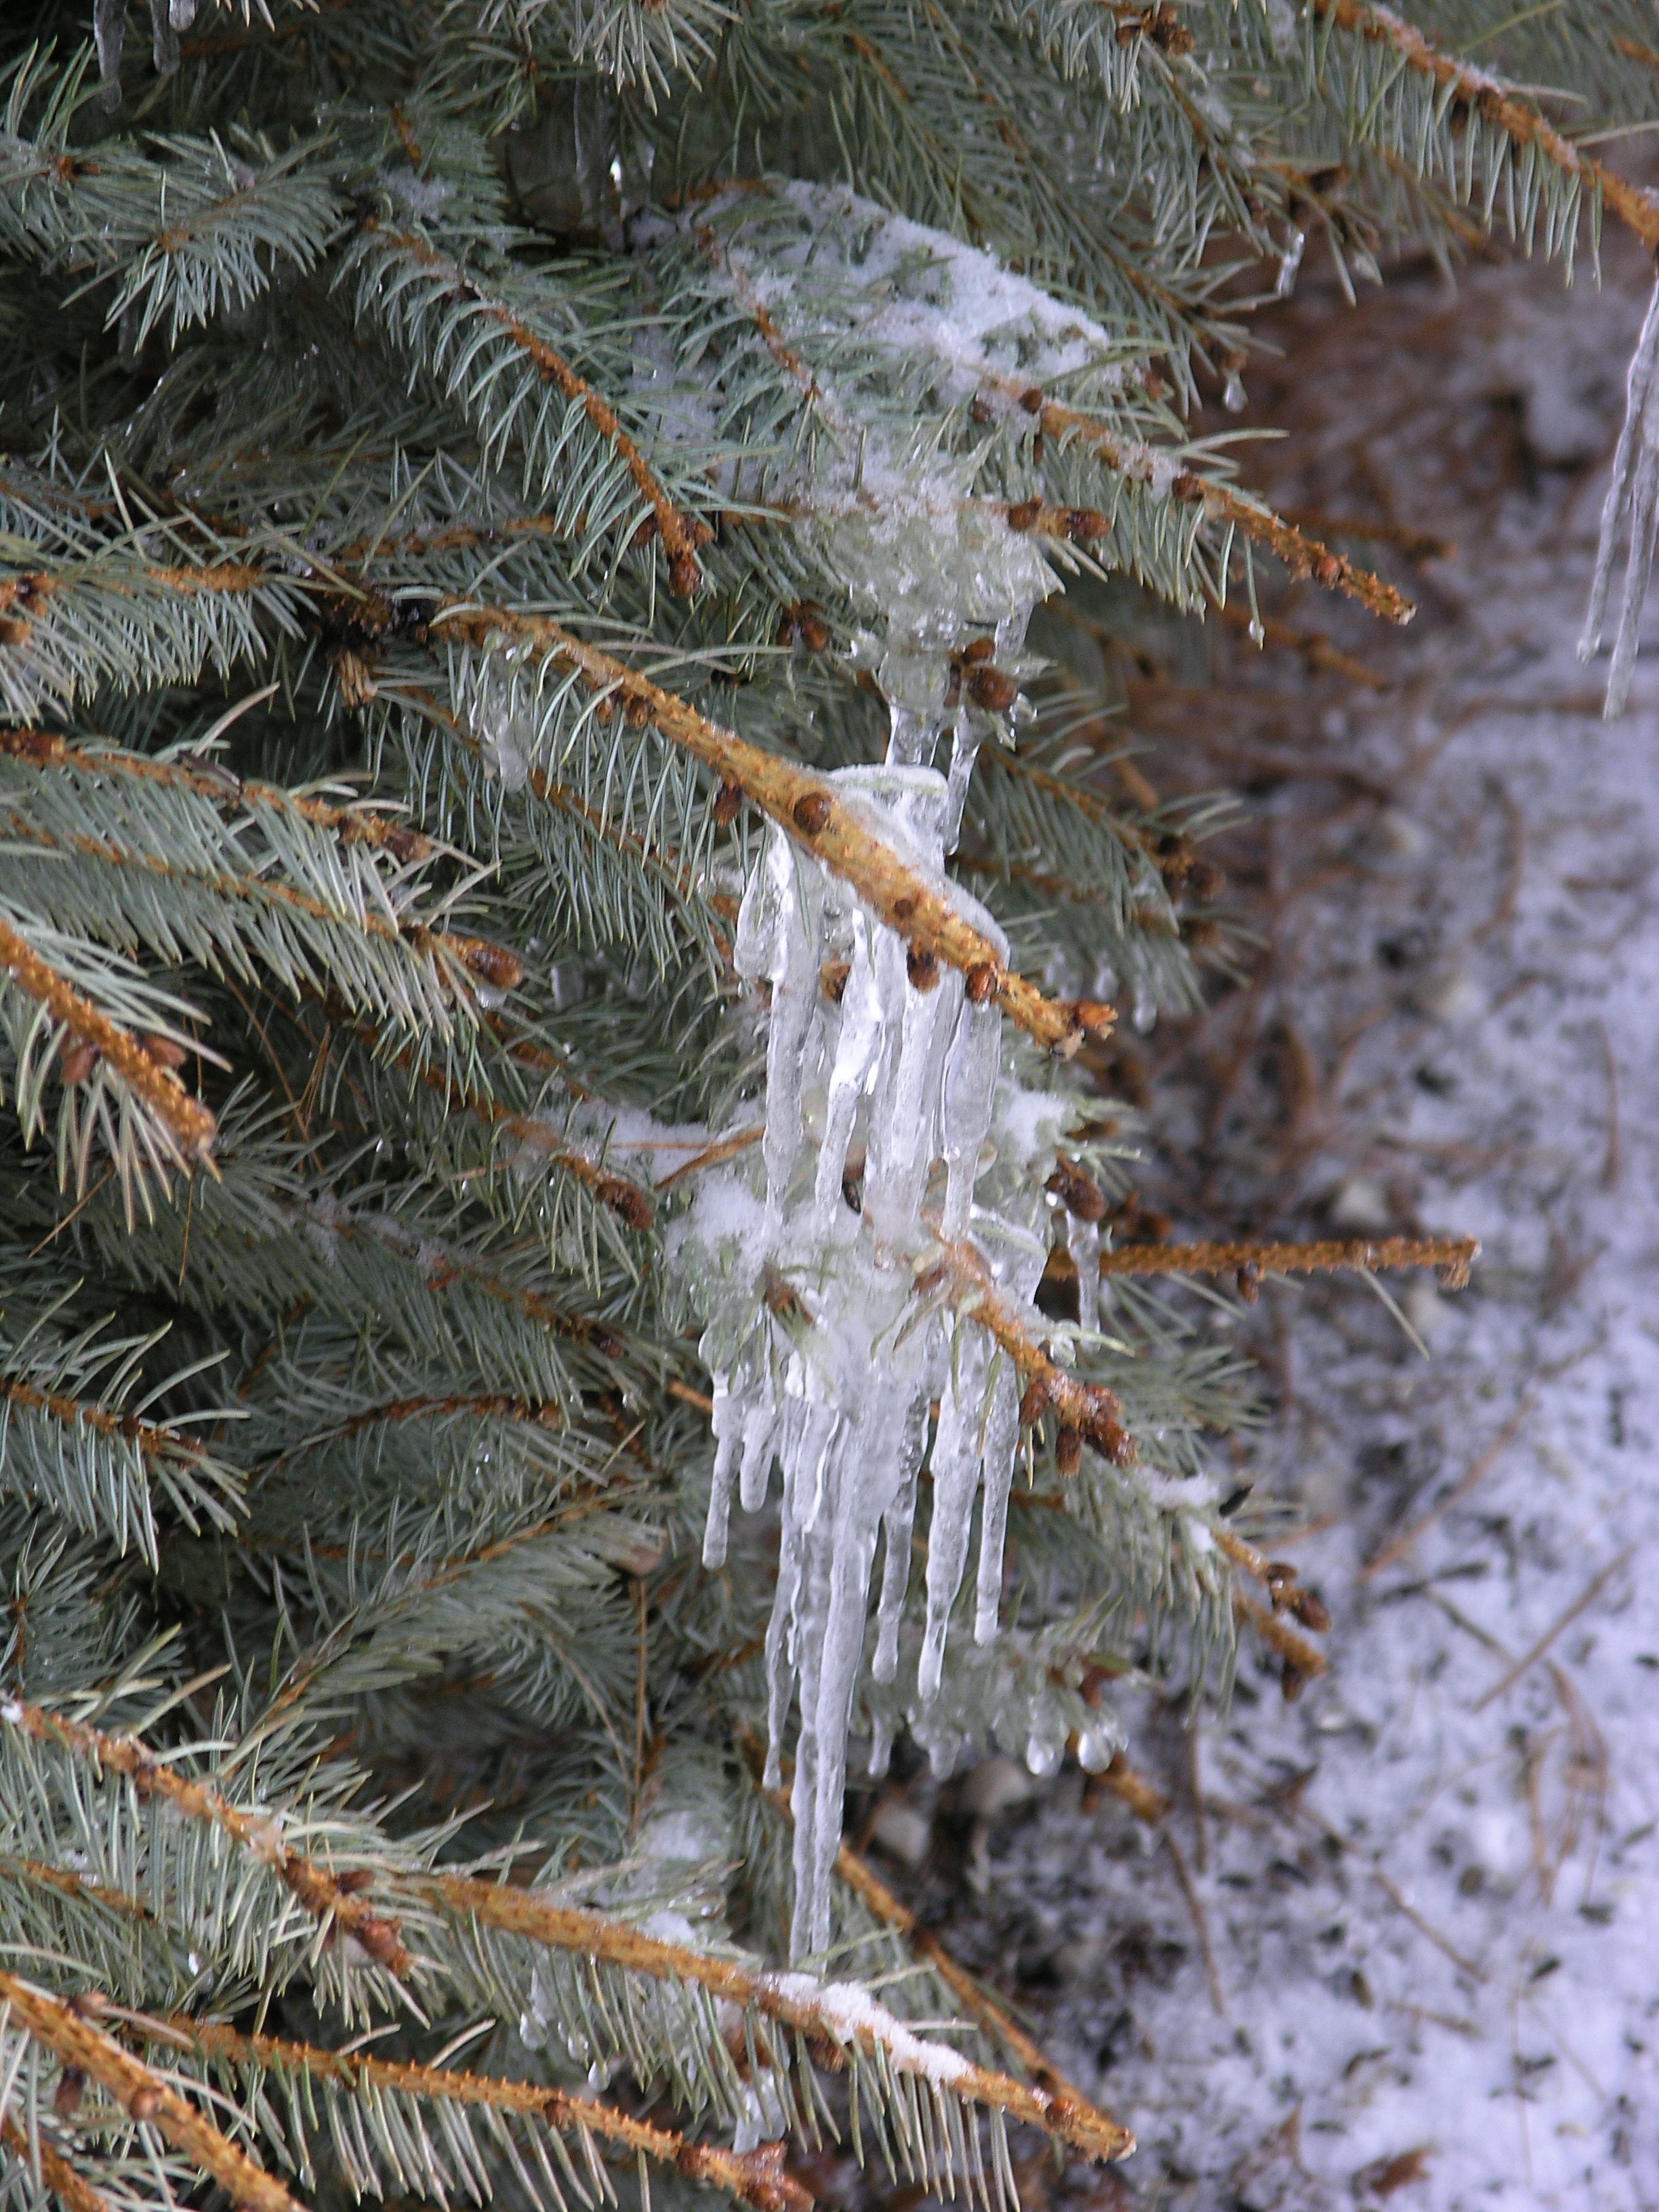 Ice on the pine